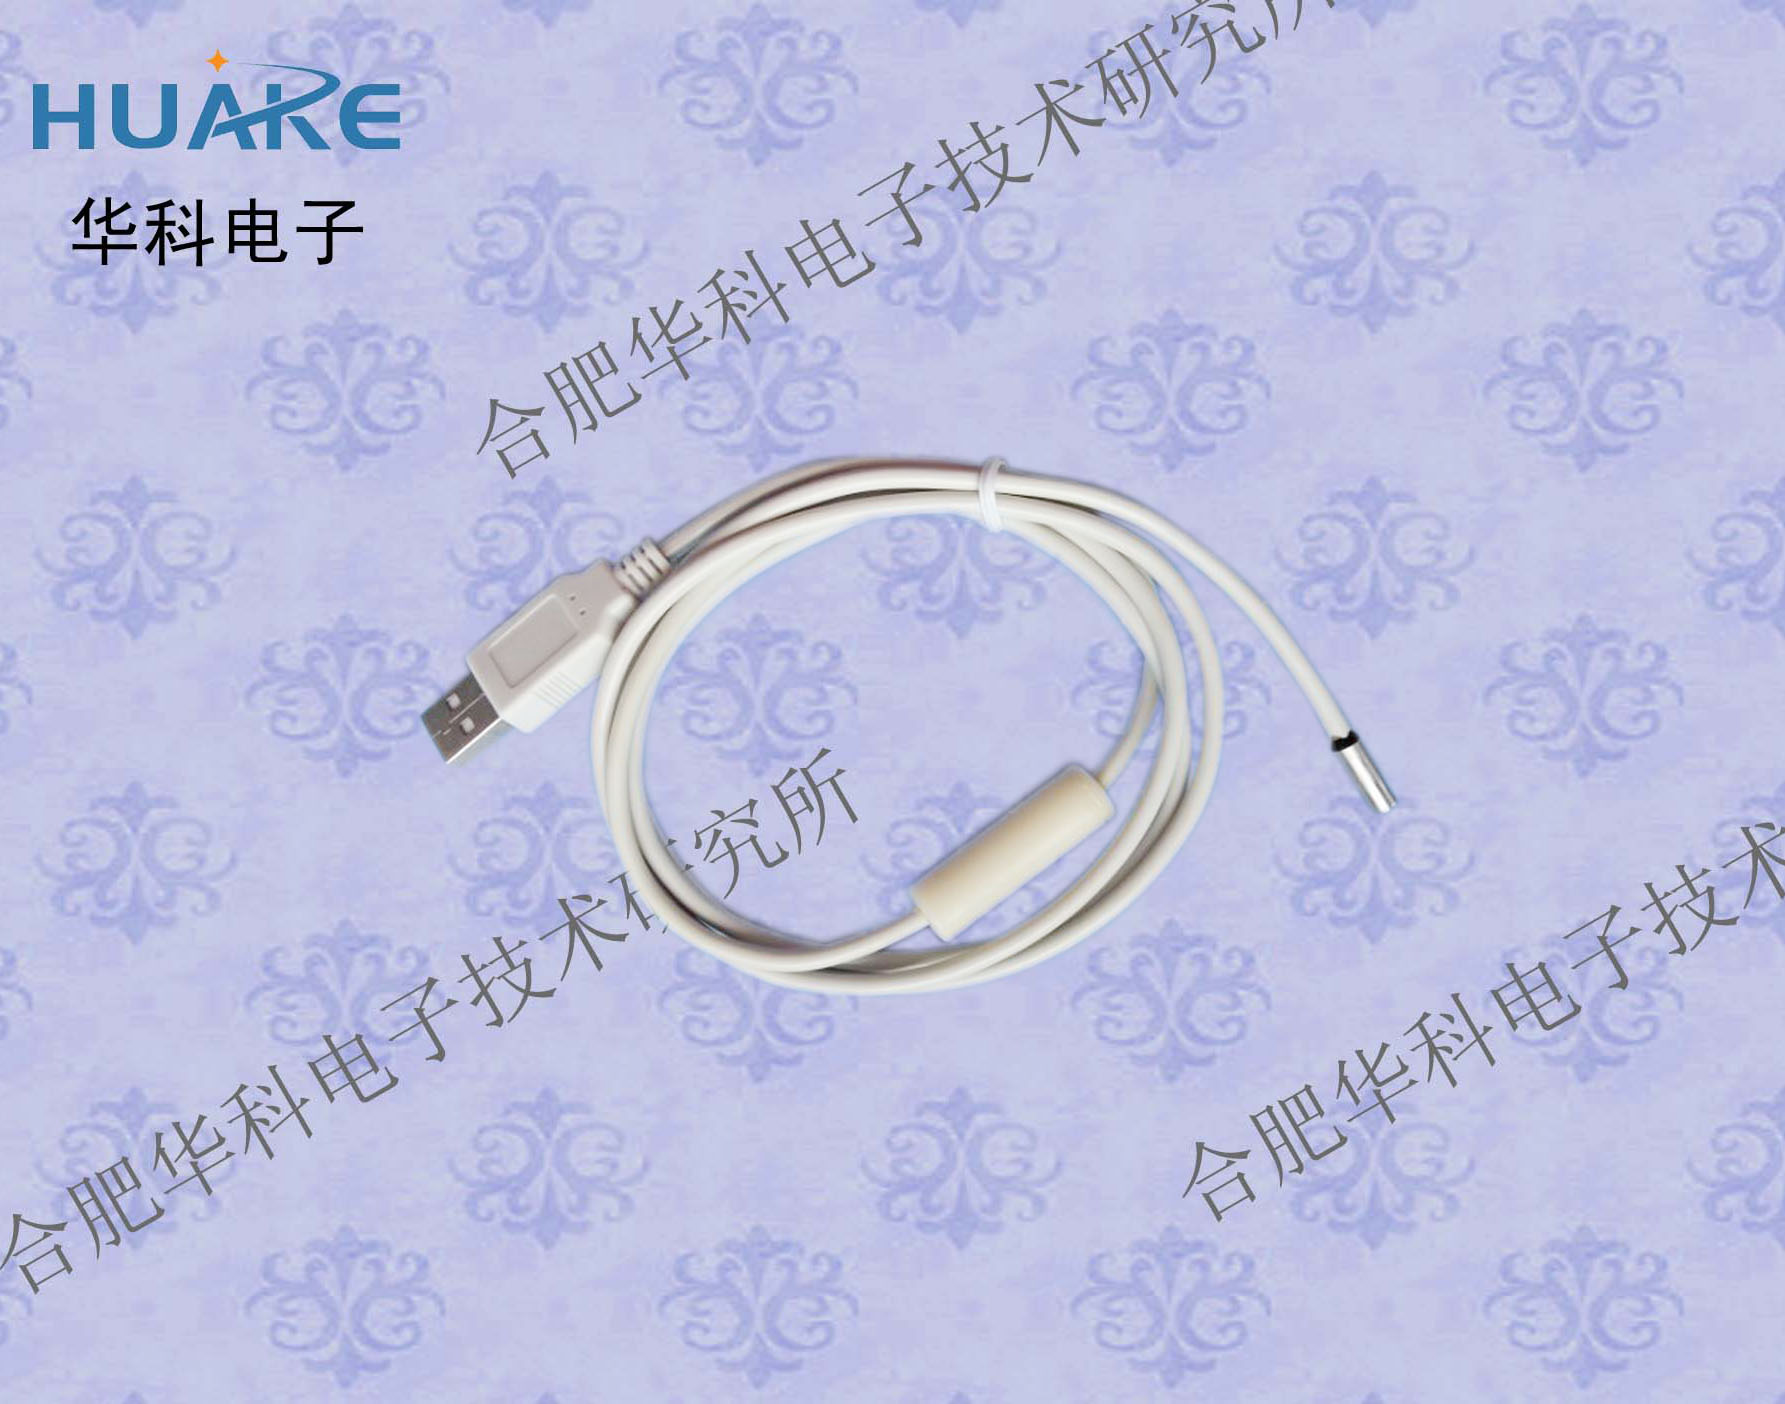 HKT-09A+体温传感器/USB体温传感器/USB体温计